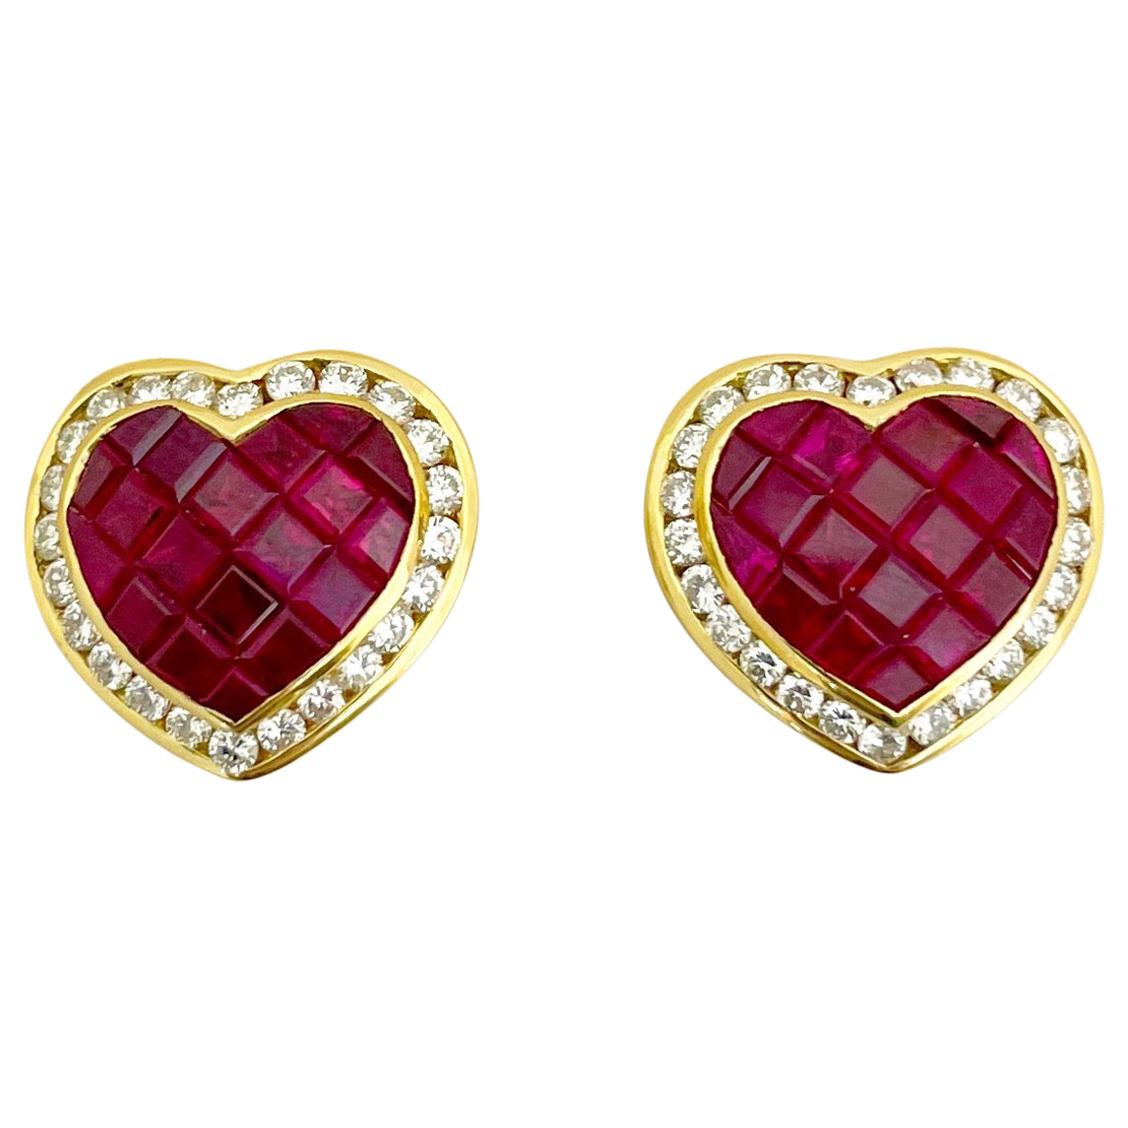 Cellini 18 Karat Gold 5.20 Carat Ruby and 1.30 Carat Diamond Heart Earrings